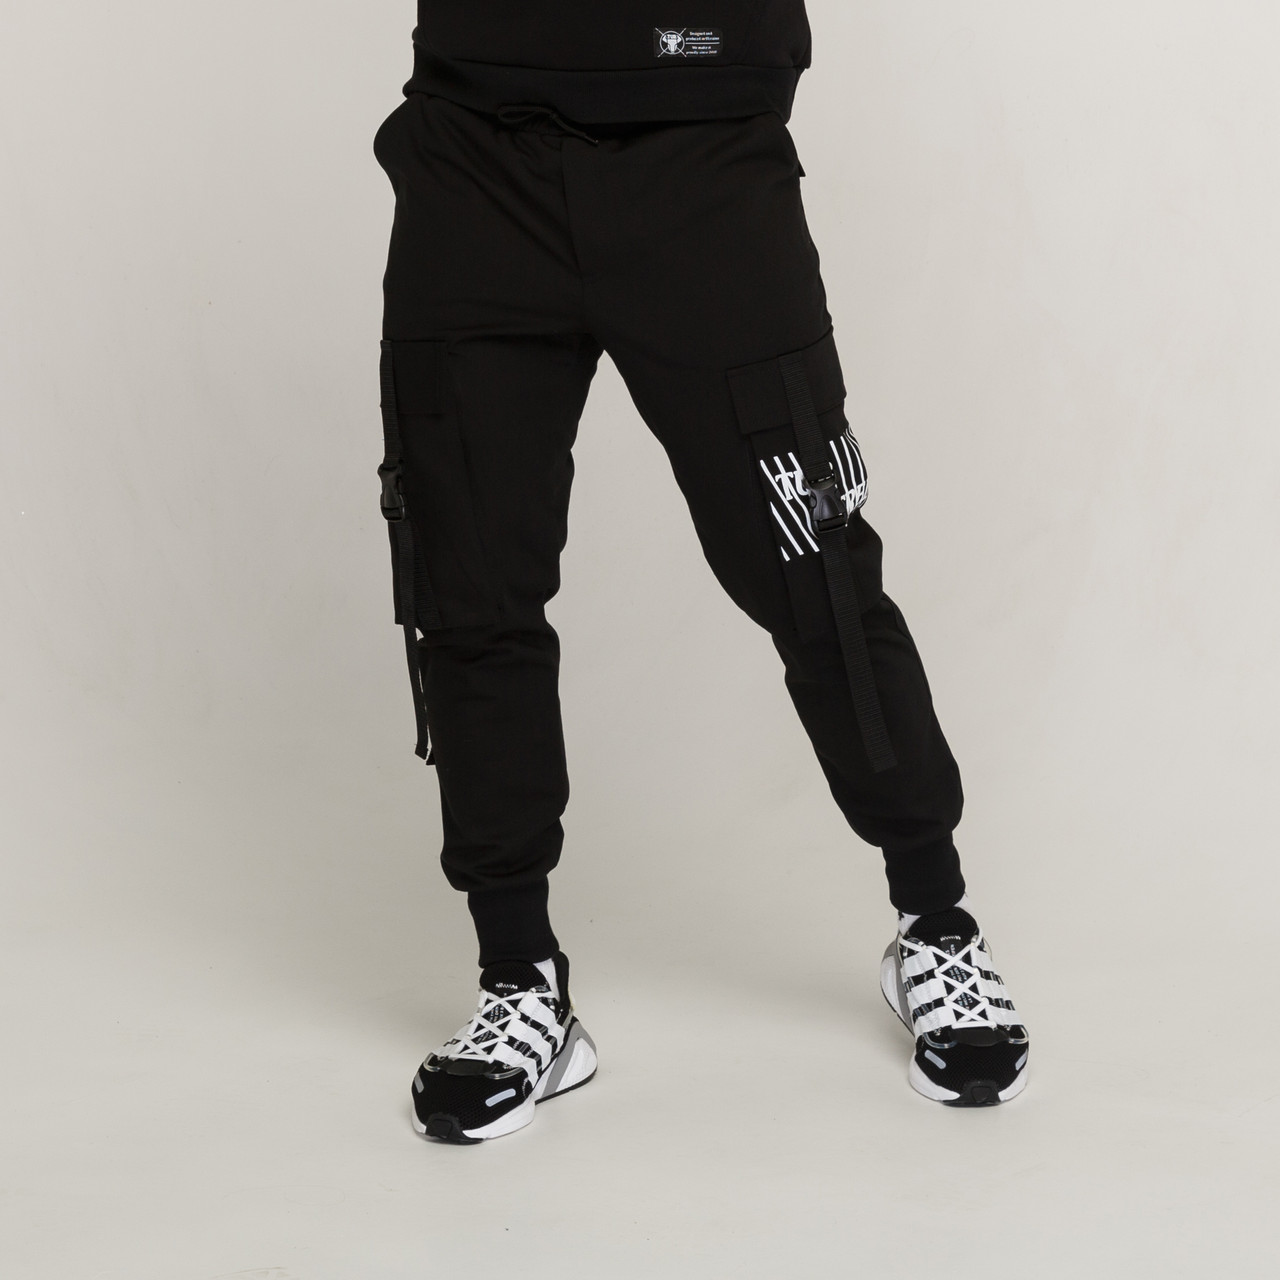 Карго штаны мужские черные бренд ТУР модель Ёсида (Yoshida) TУRWEAR